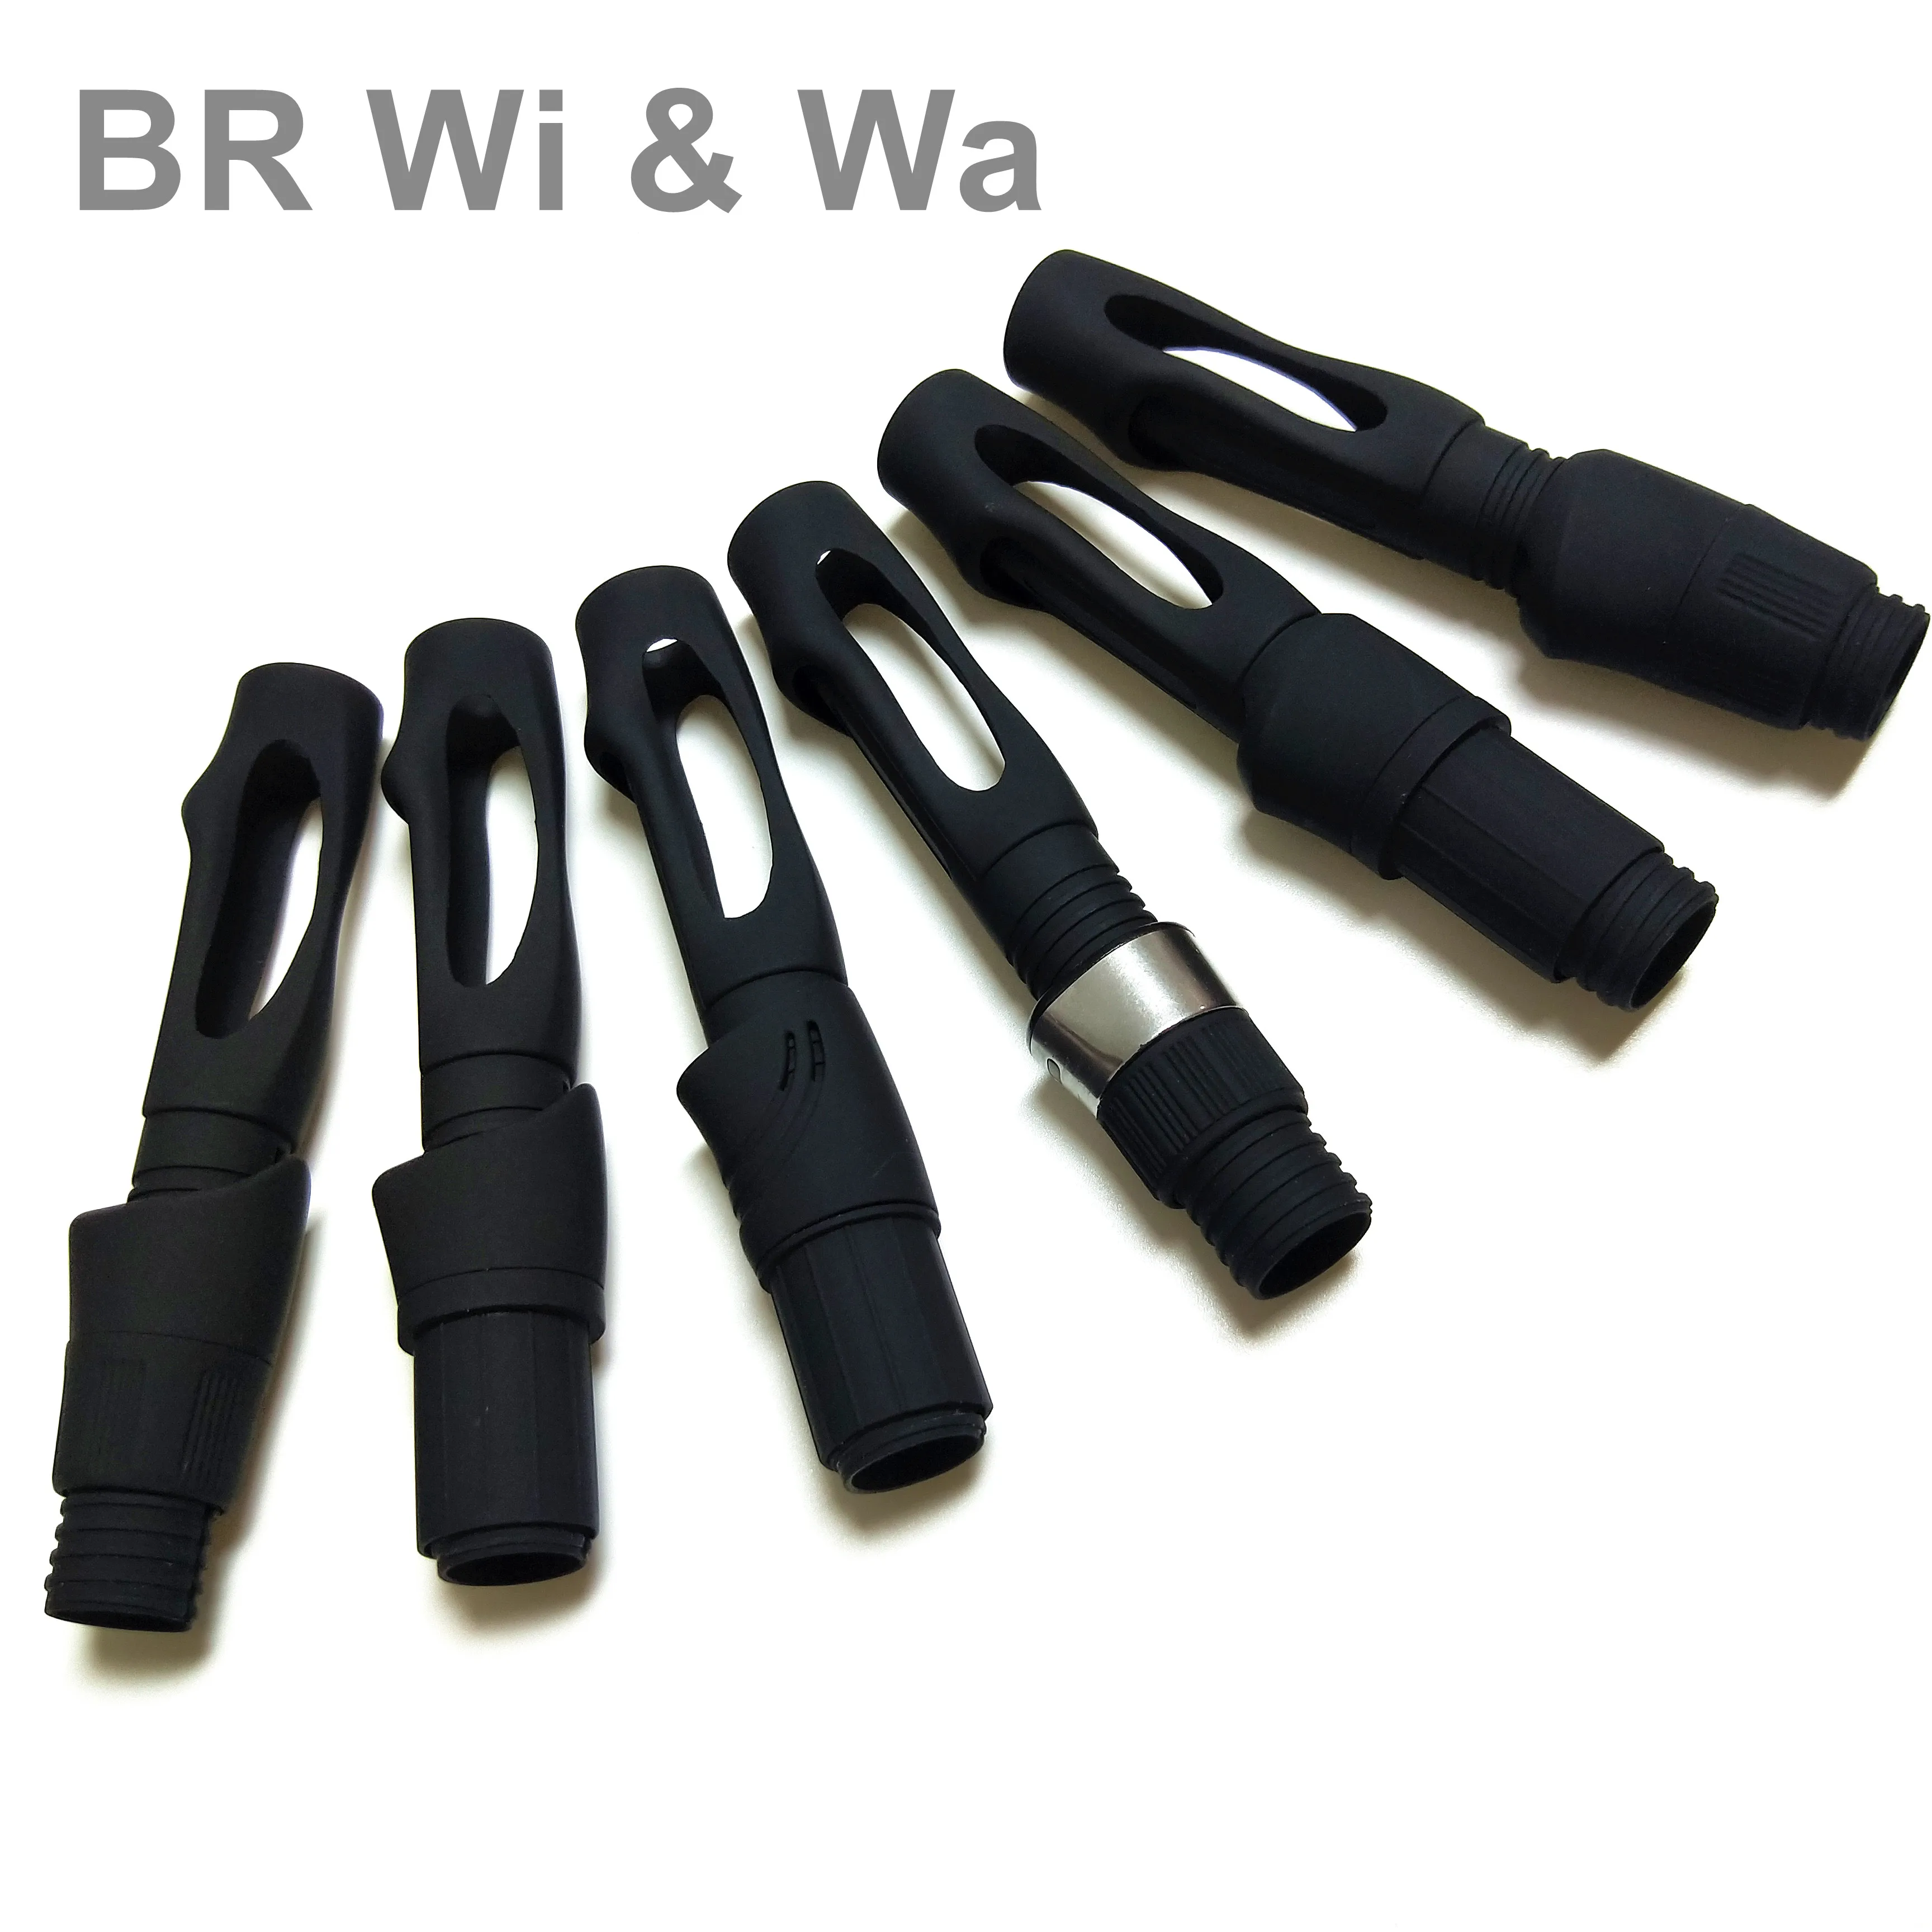 

BR Wi&Wa OVS reel seat Non-slip Matte Black Super Smooth Super Sear-resistant Reel Reat Size16 DIY repair fishing rod 1PCS